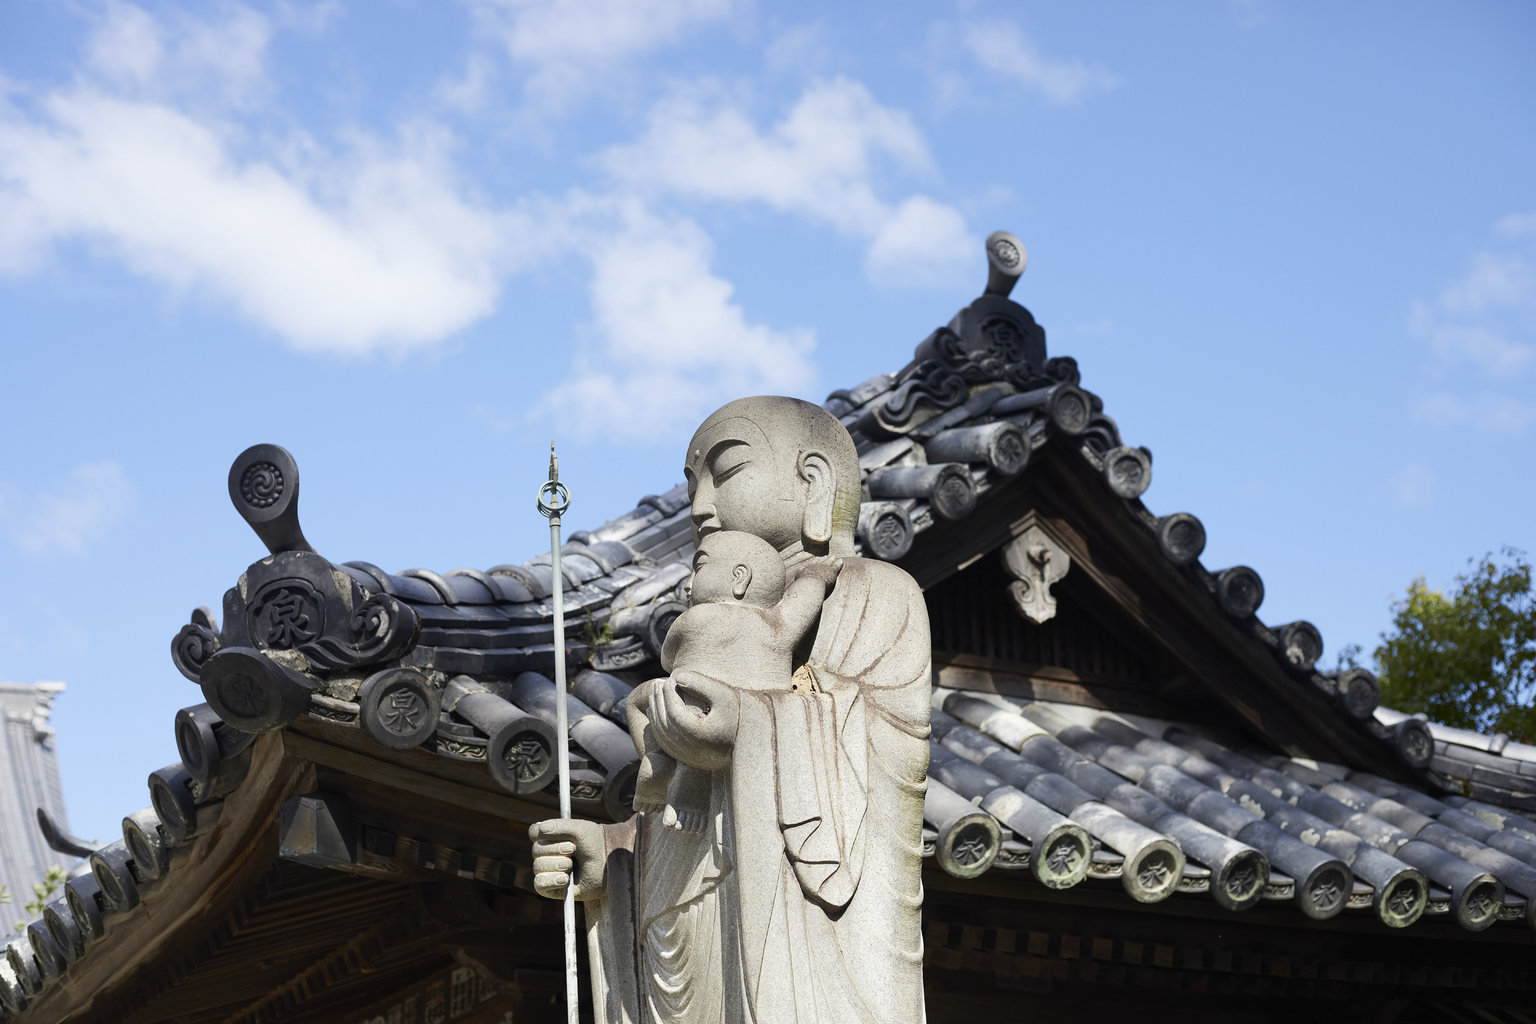 Japan to name 88 landmarks to create 'anime pilgrimage